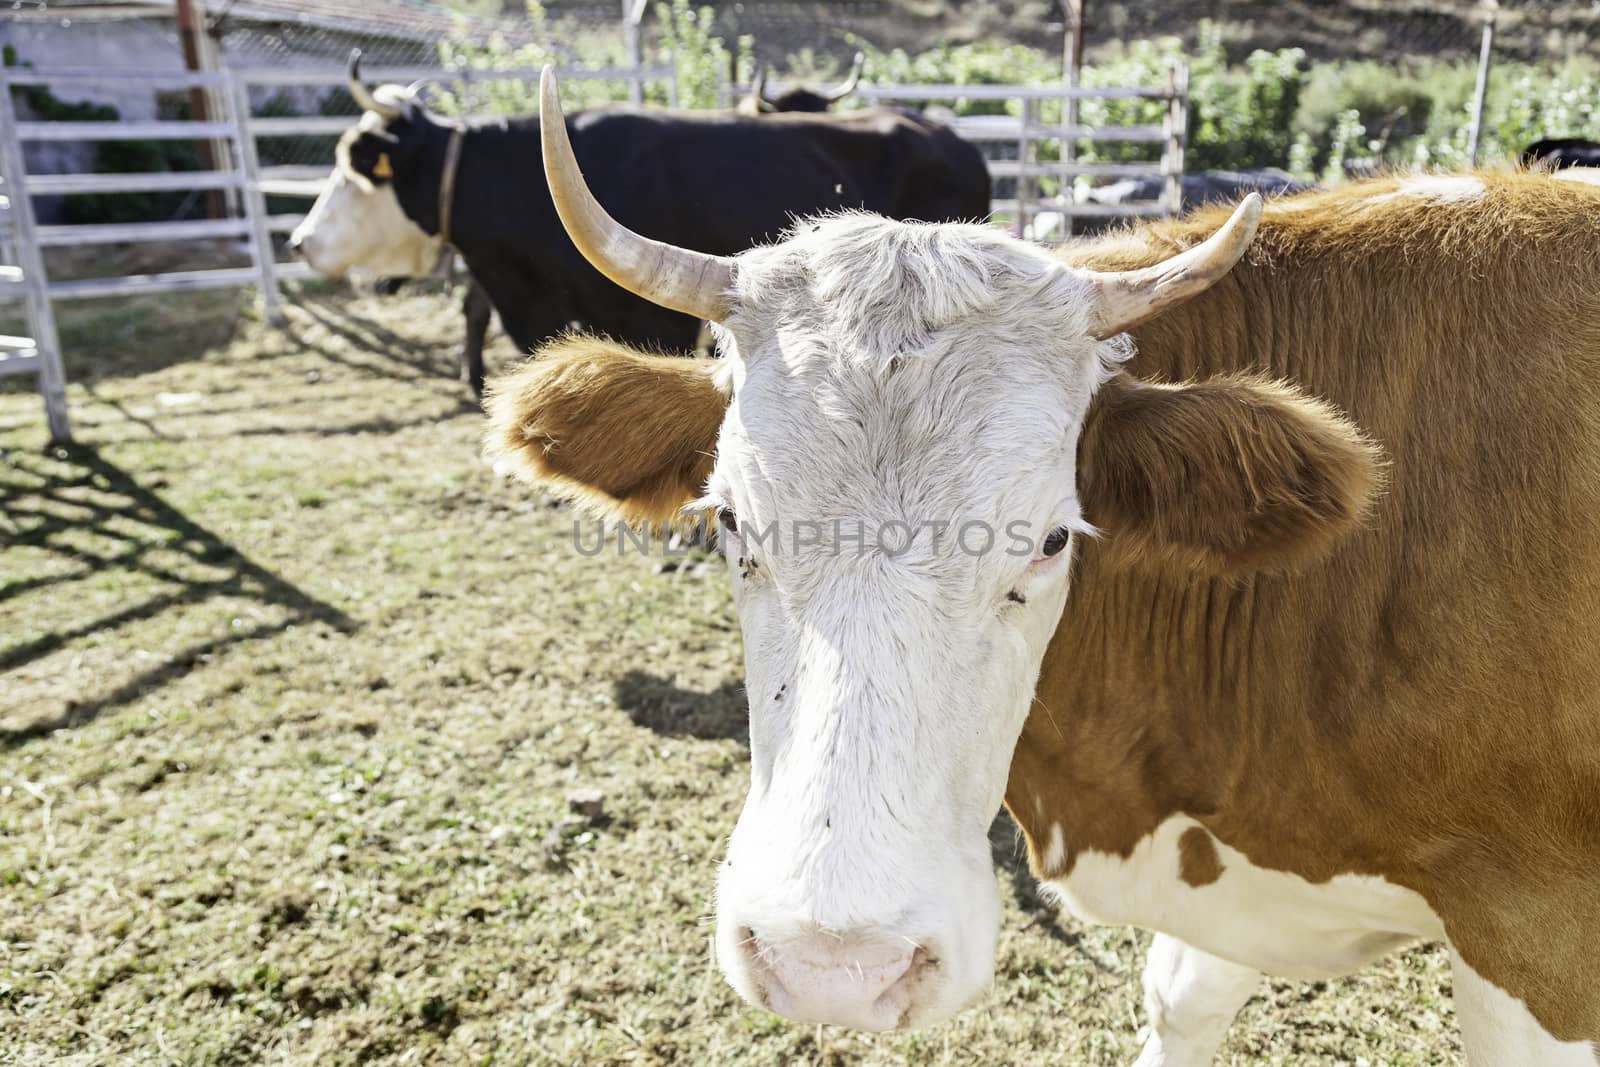 Cow farm by esebene